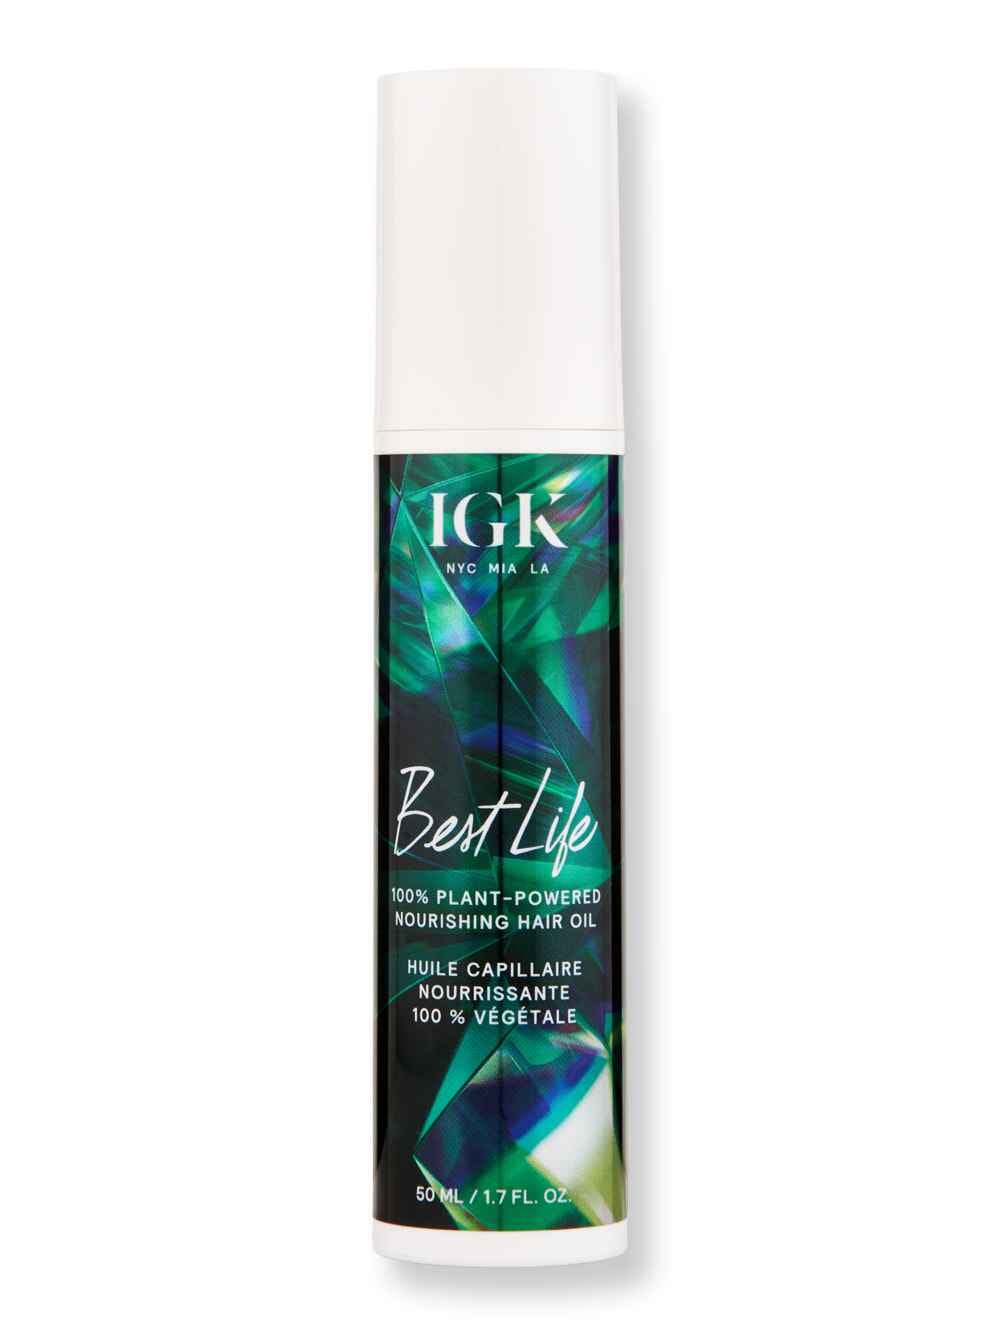 iGK iGK Best Life Nourishing Hair Oil 1.7 oz Styling Treatments 